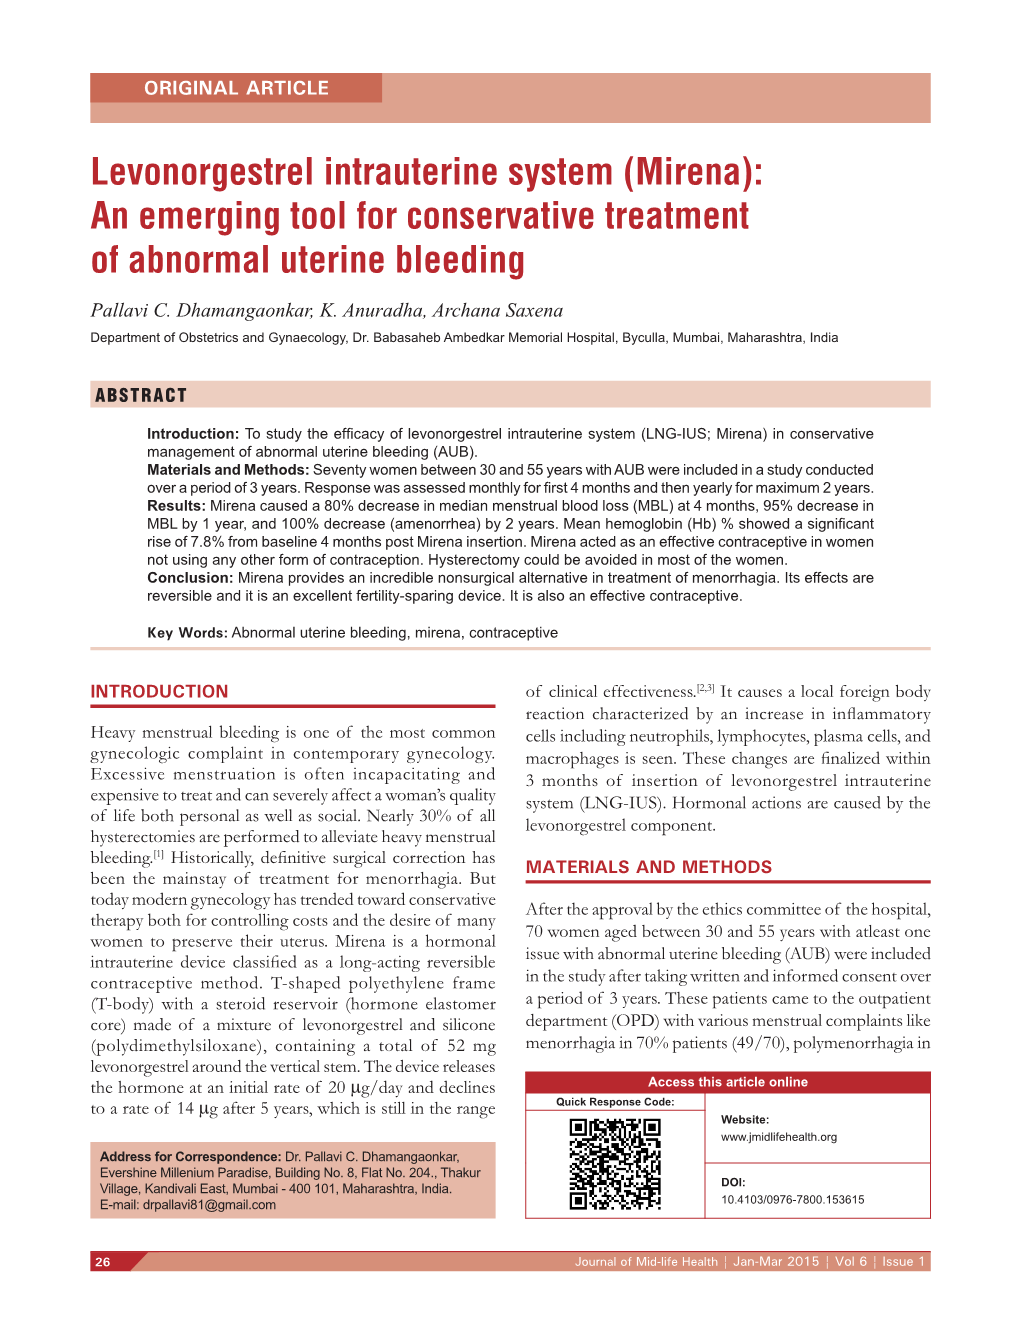 Levonorgestrel Intrauterine System (Mirena): an Emerging Tool for Conservative Treatment of Abnormal Uterine Bleeding Pallavi C